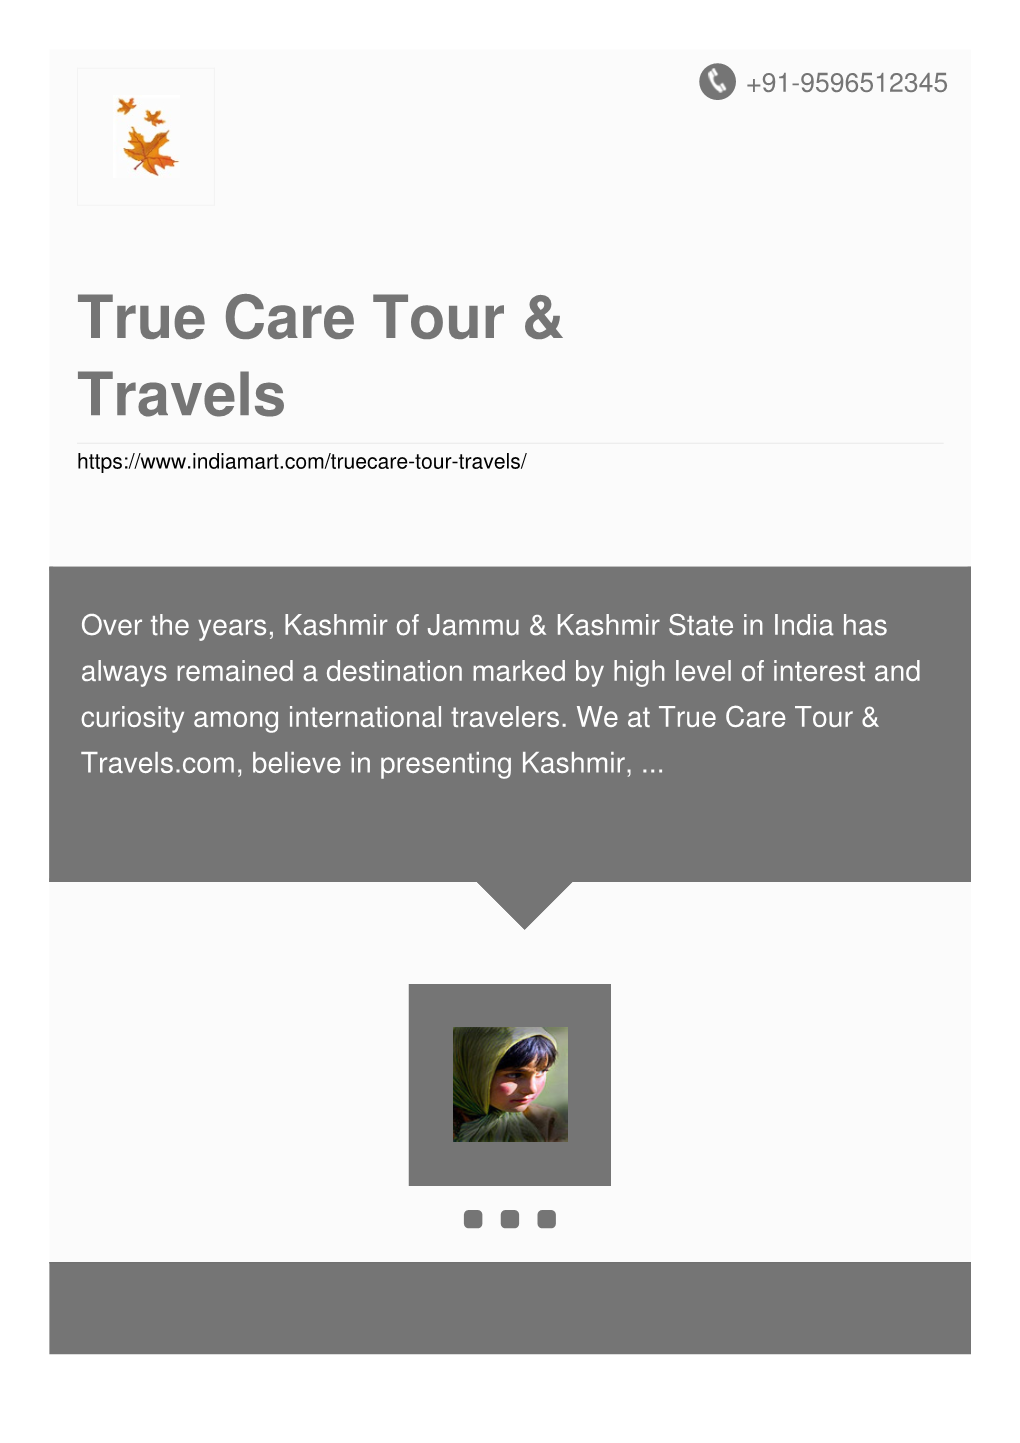 True Care Tour & Travels